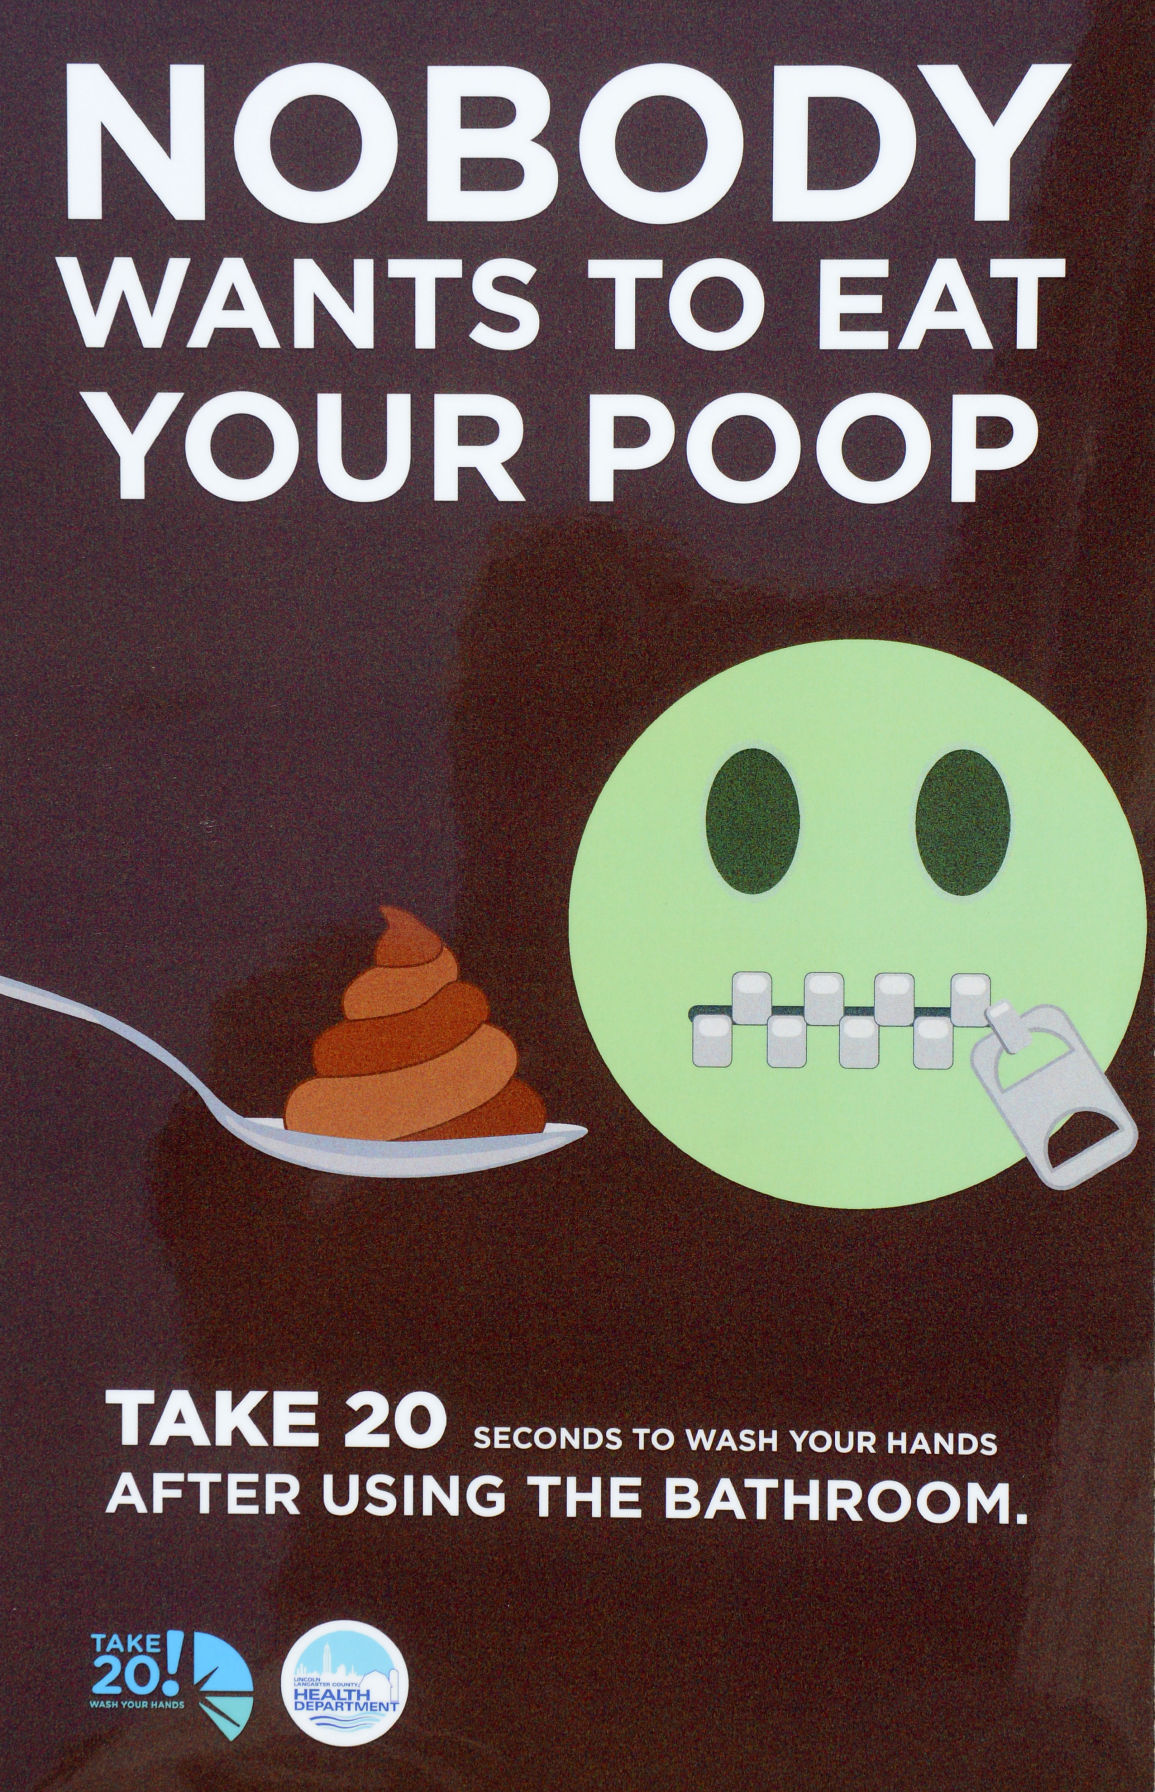 Eye-catching posters promote hand-washing | News | columbustelegram.com
